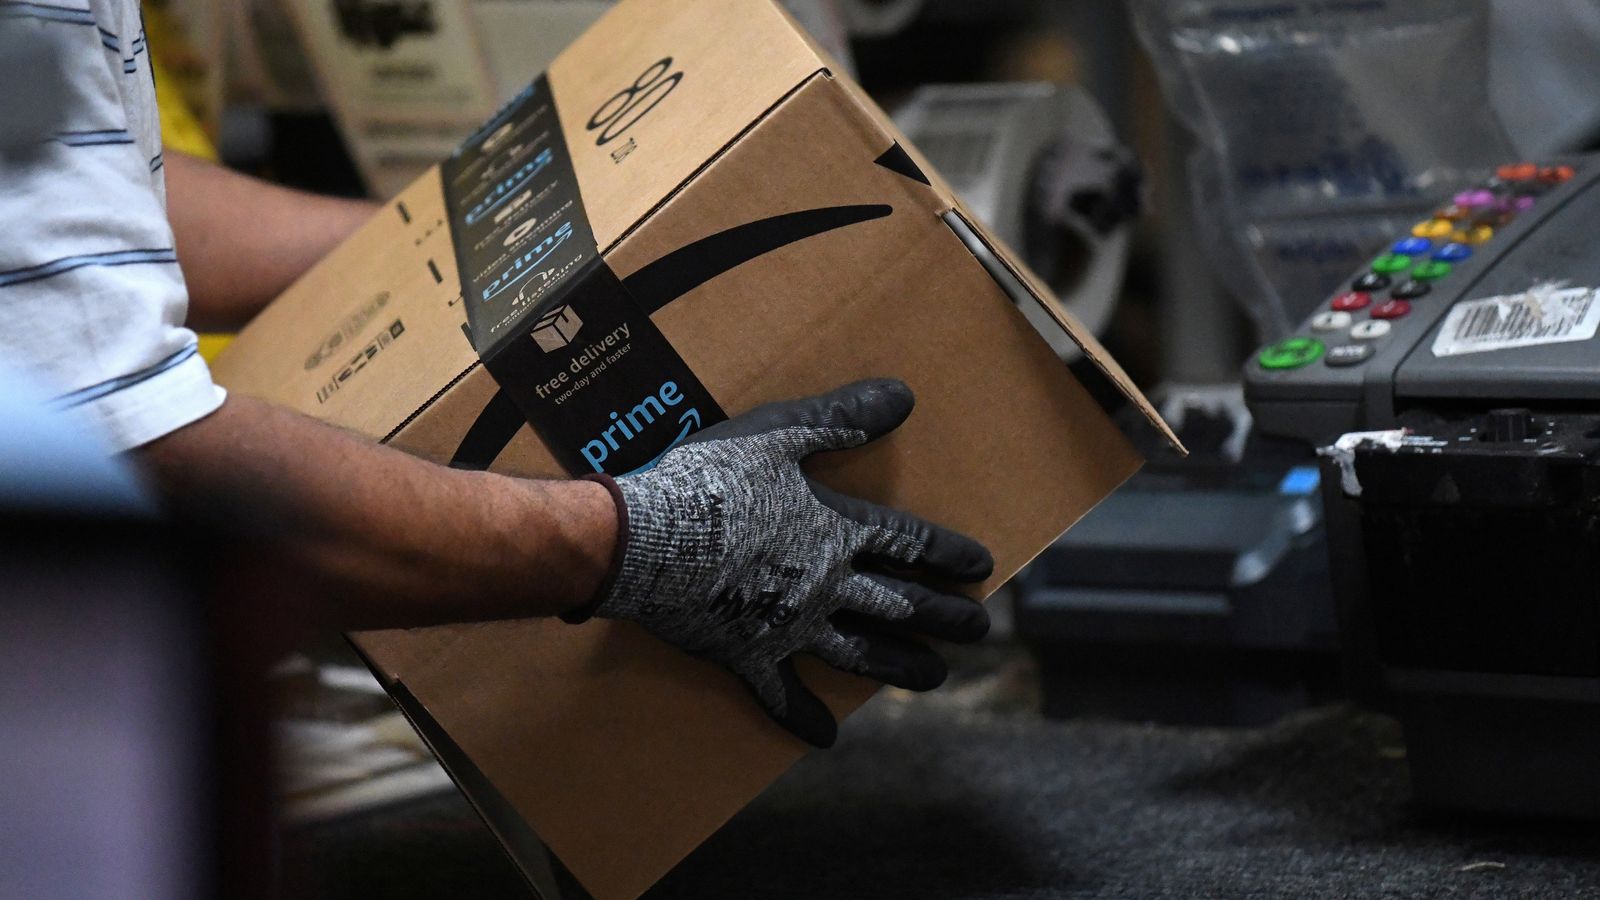 Amazon UK warehouse shake-up places 1,200 jobs at risk